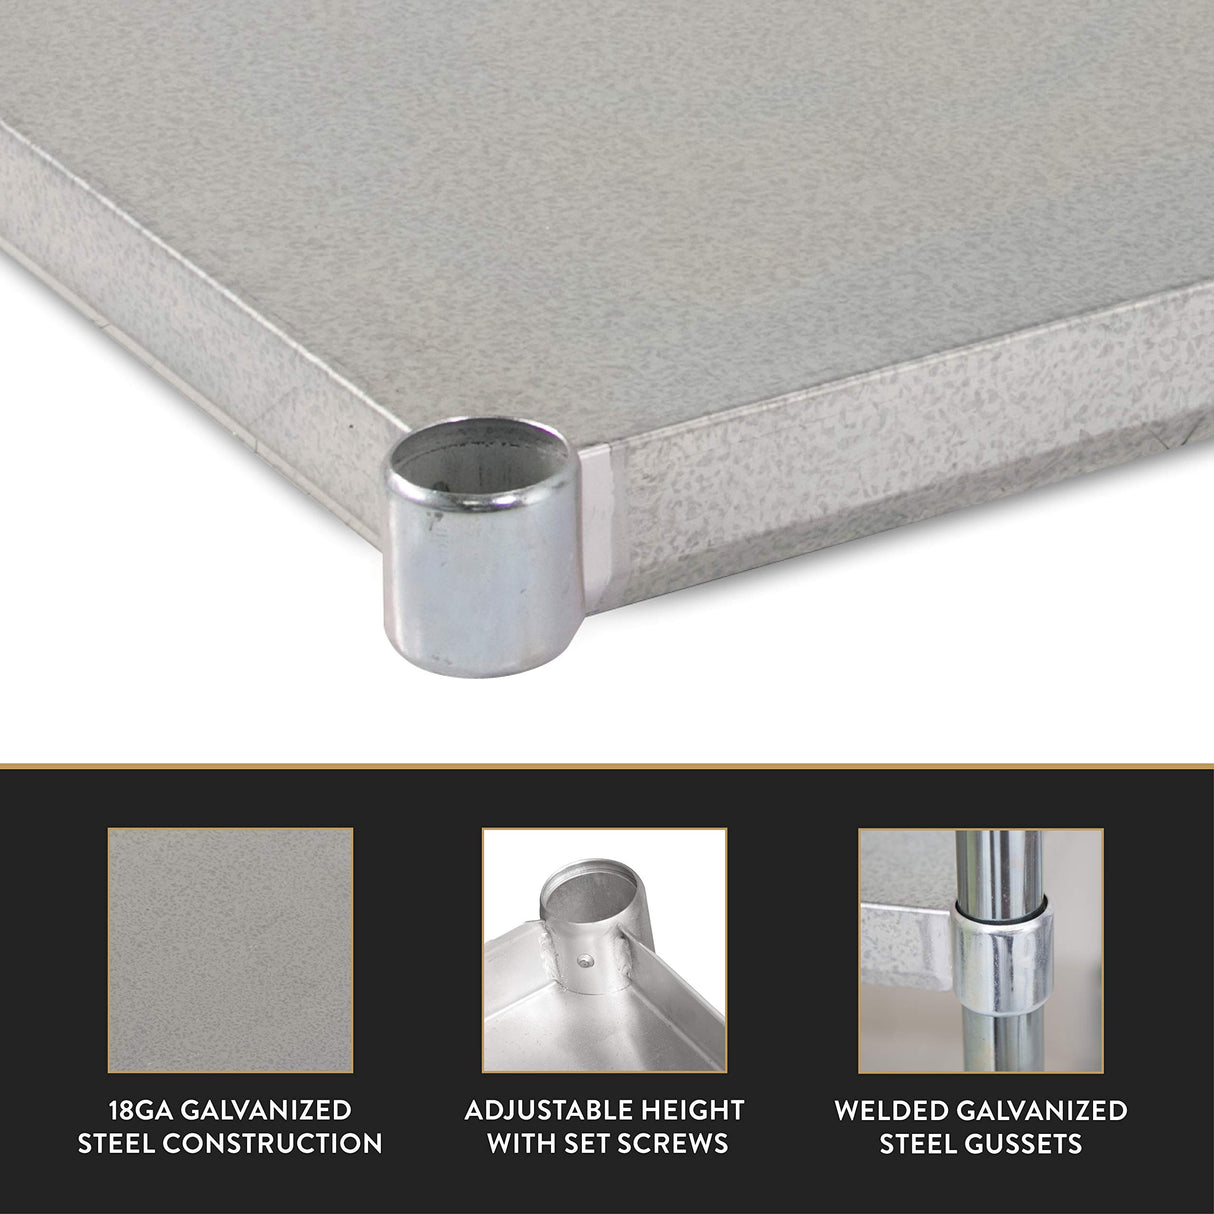 John Boos ESSK8-3072 Stainless Steel Additional/Add-On Work Table Lower Shelf/Undershelf (Shelf Only), 72"L x 30"W